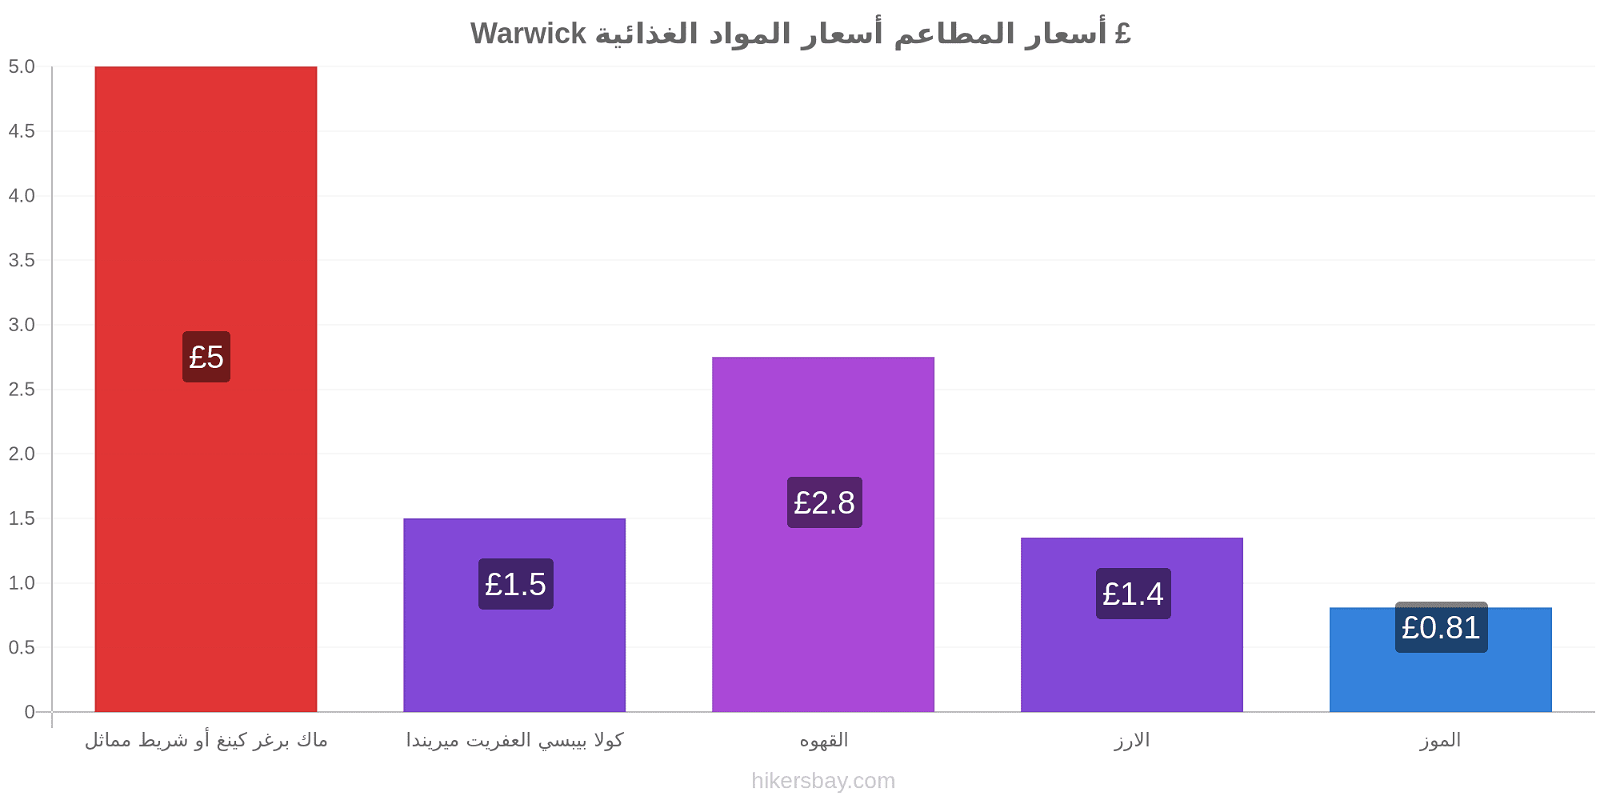 Warwick تغييرات الأسعار hikersbay.com